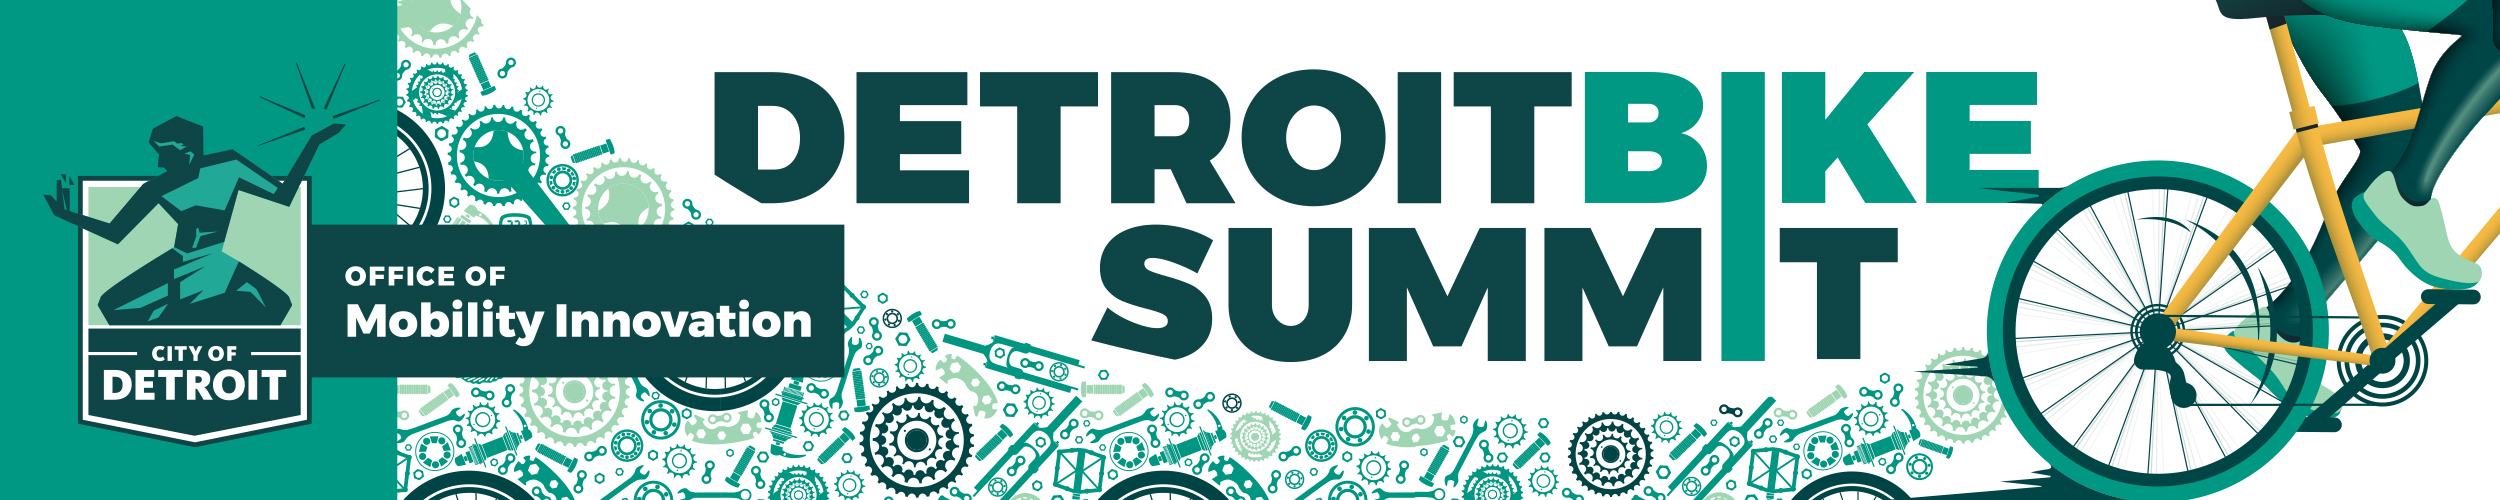 Detroit Bike Summit